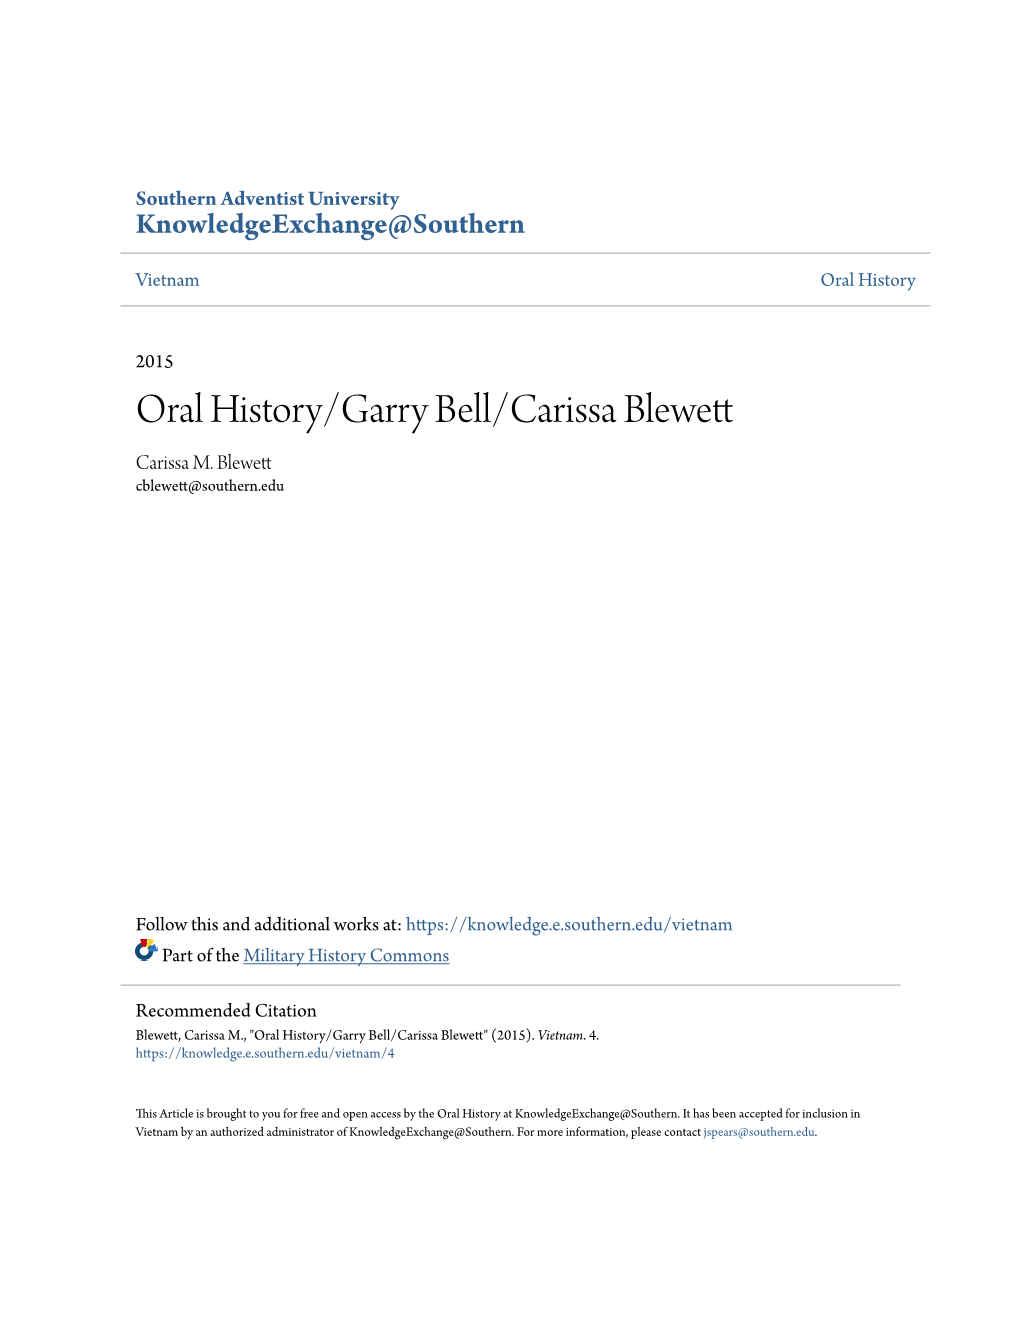 Oral History/Garry Bell/Carissa Blewett Carissa M